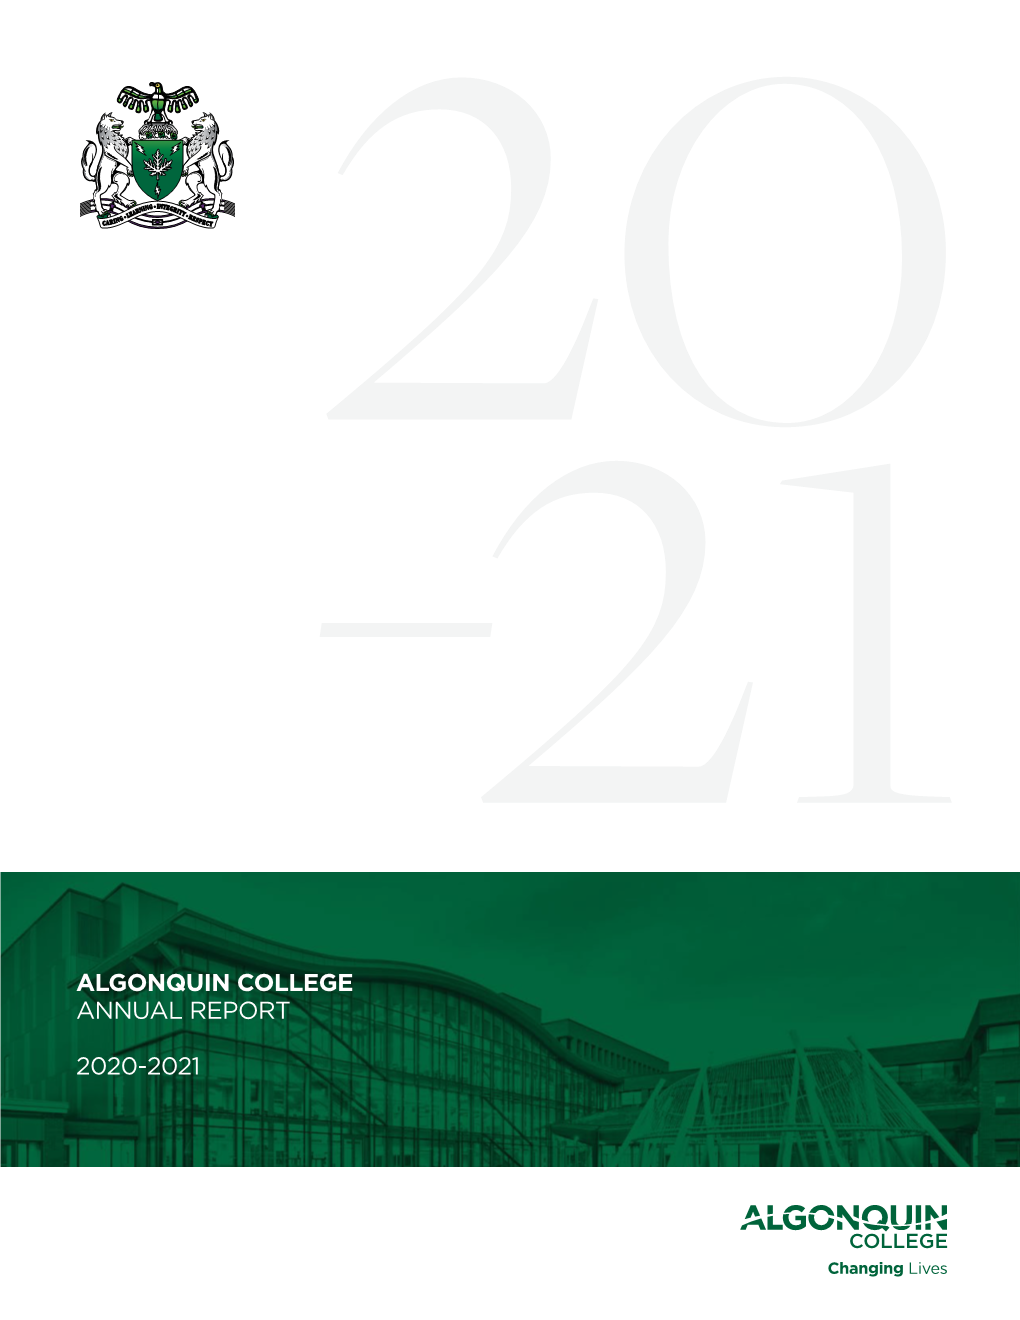 Algonquin College Annual Report 2020-2021 3 College at a Glance 2020-2021 Strategic Goals